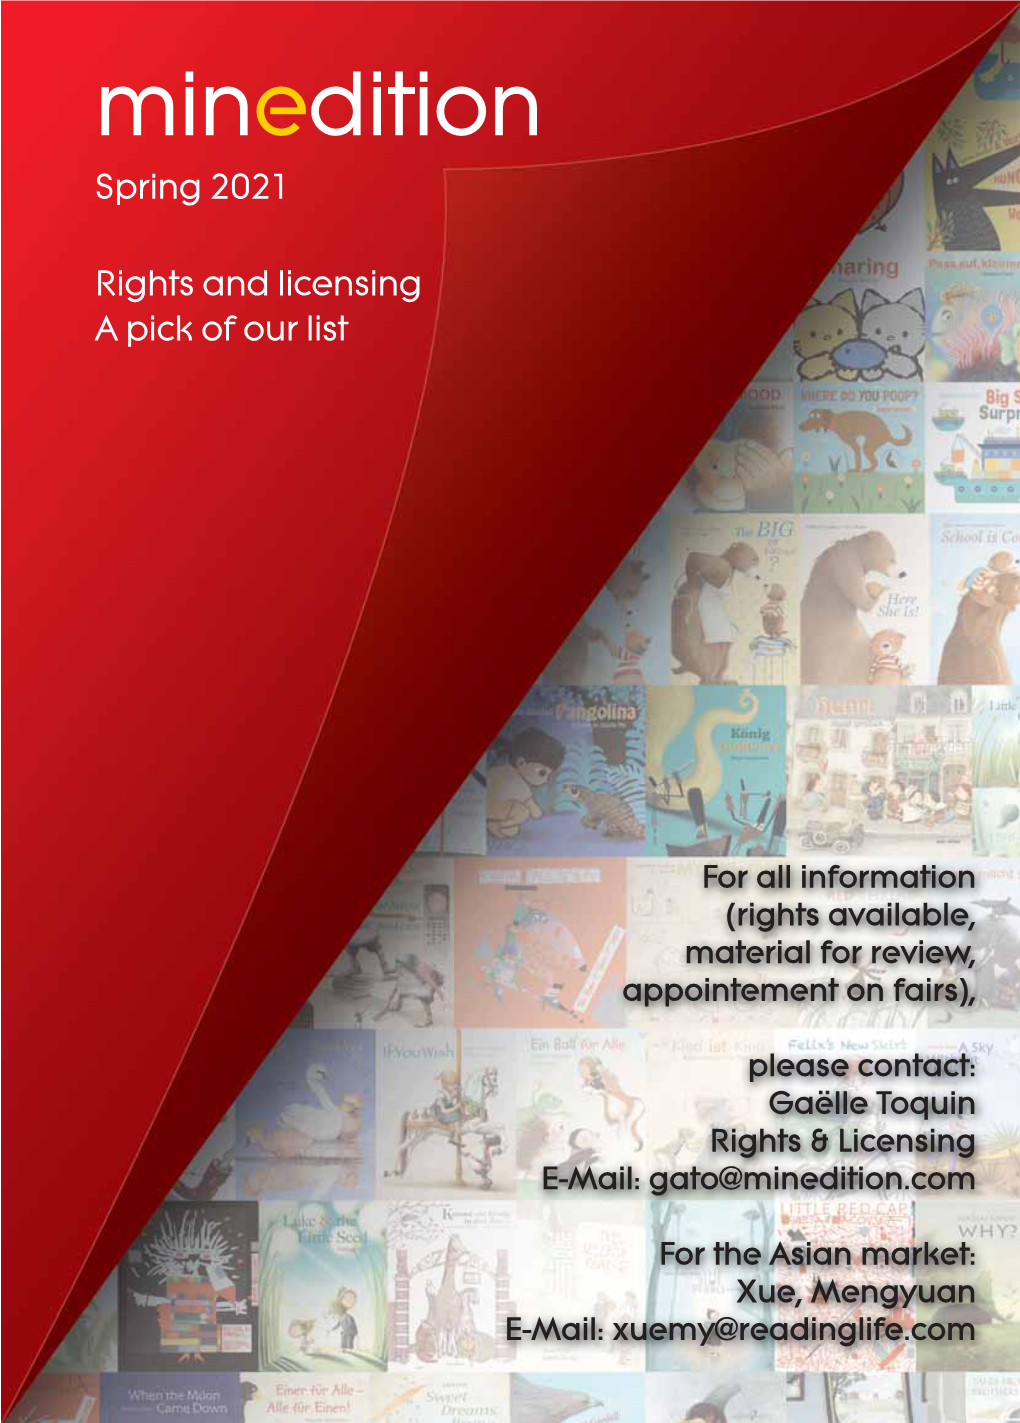 New Rights Catalogue